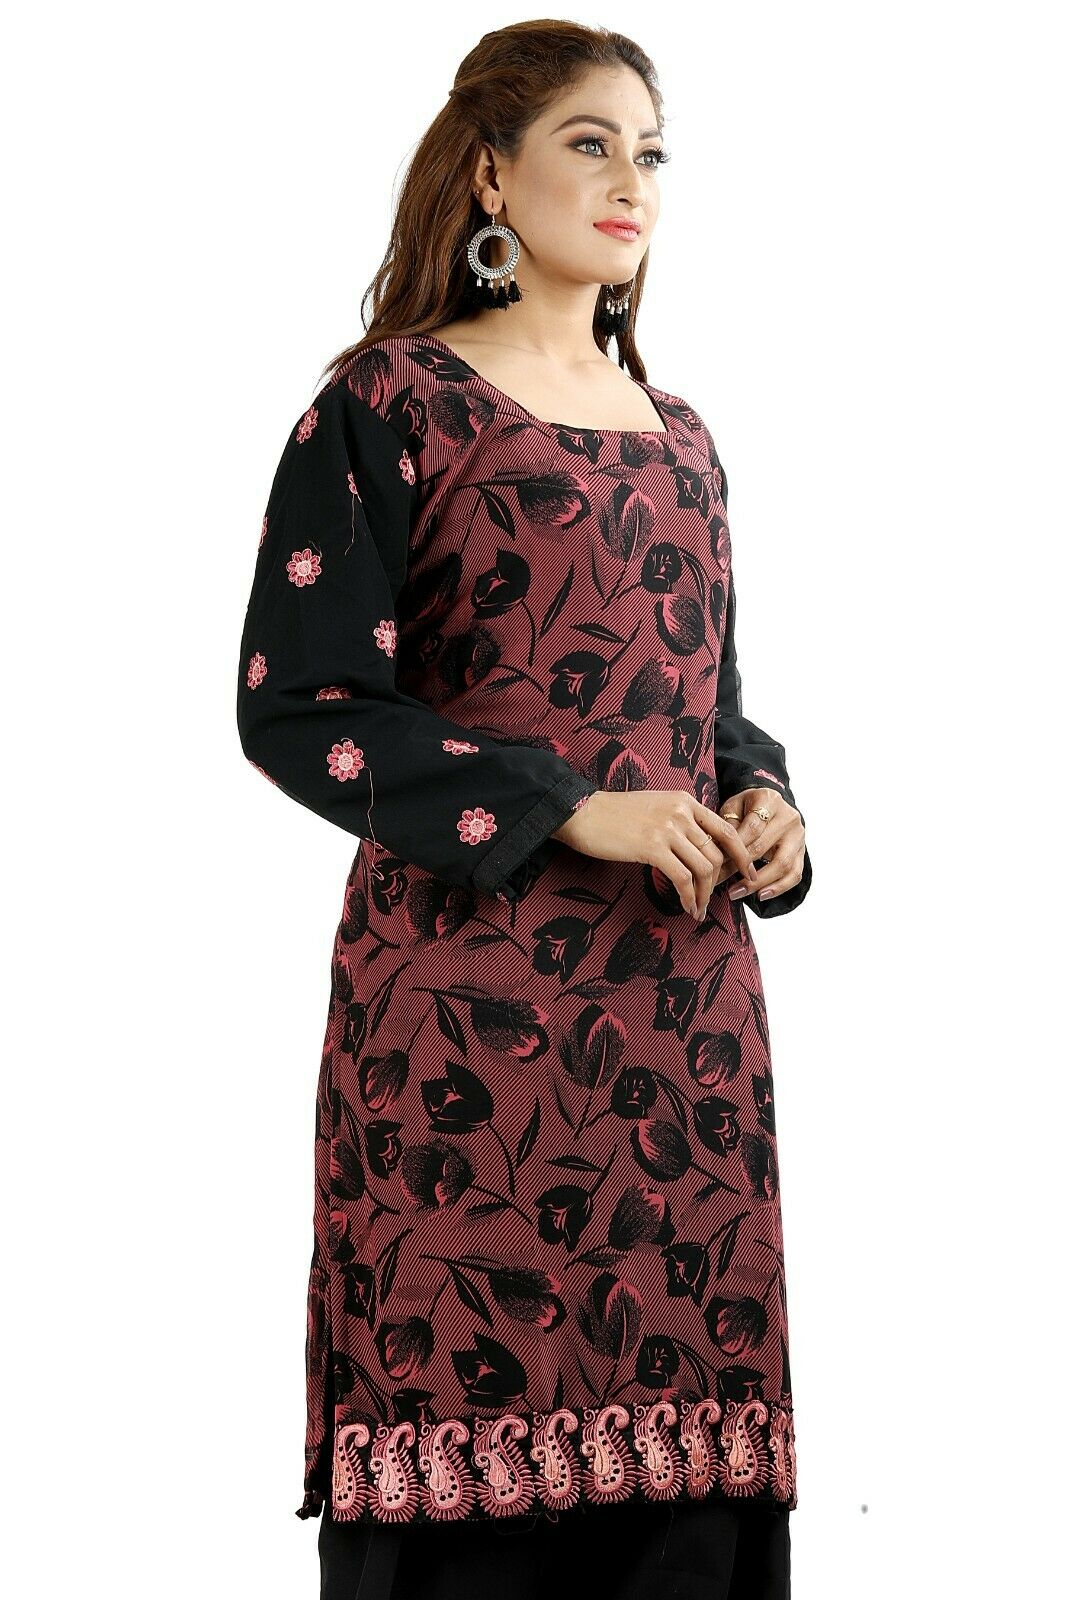 Brown Designer  Women India  Traditional Dress Salwar kameez chest size 48